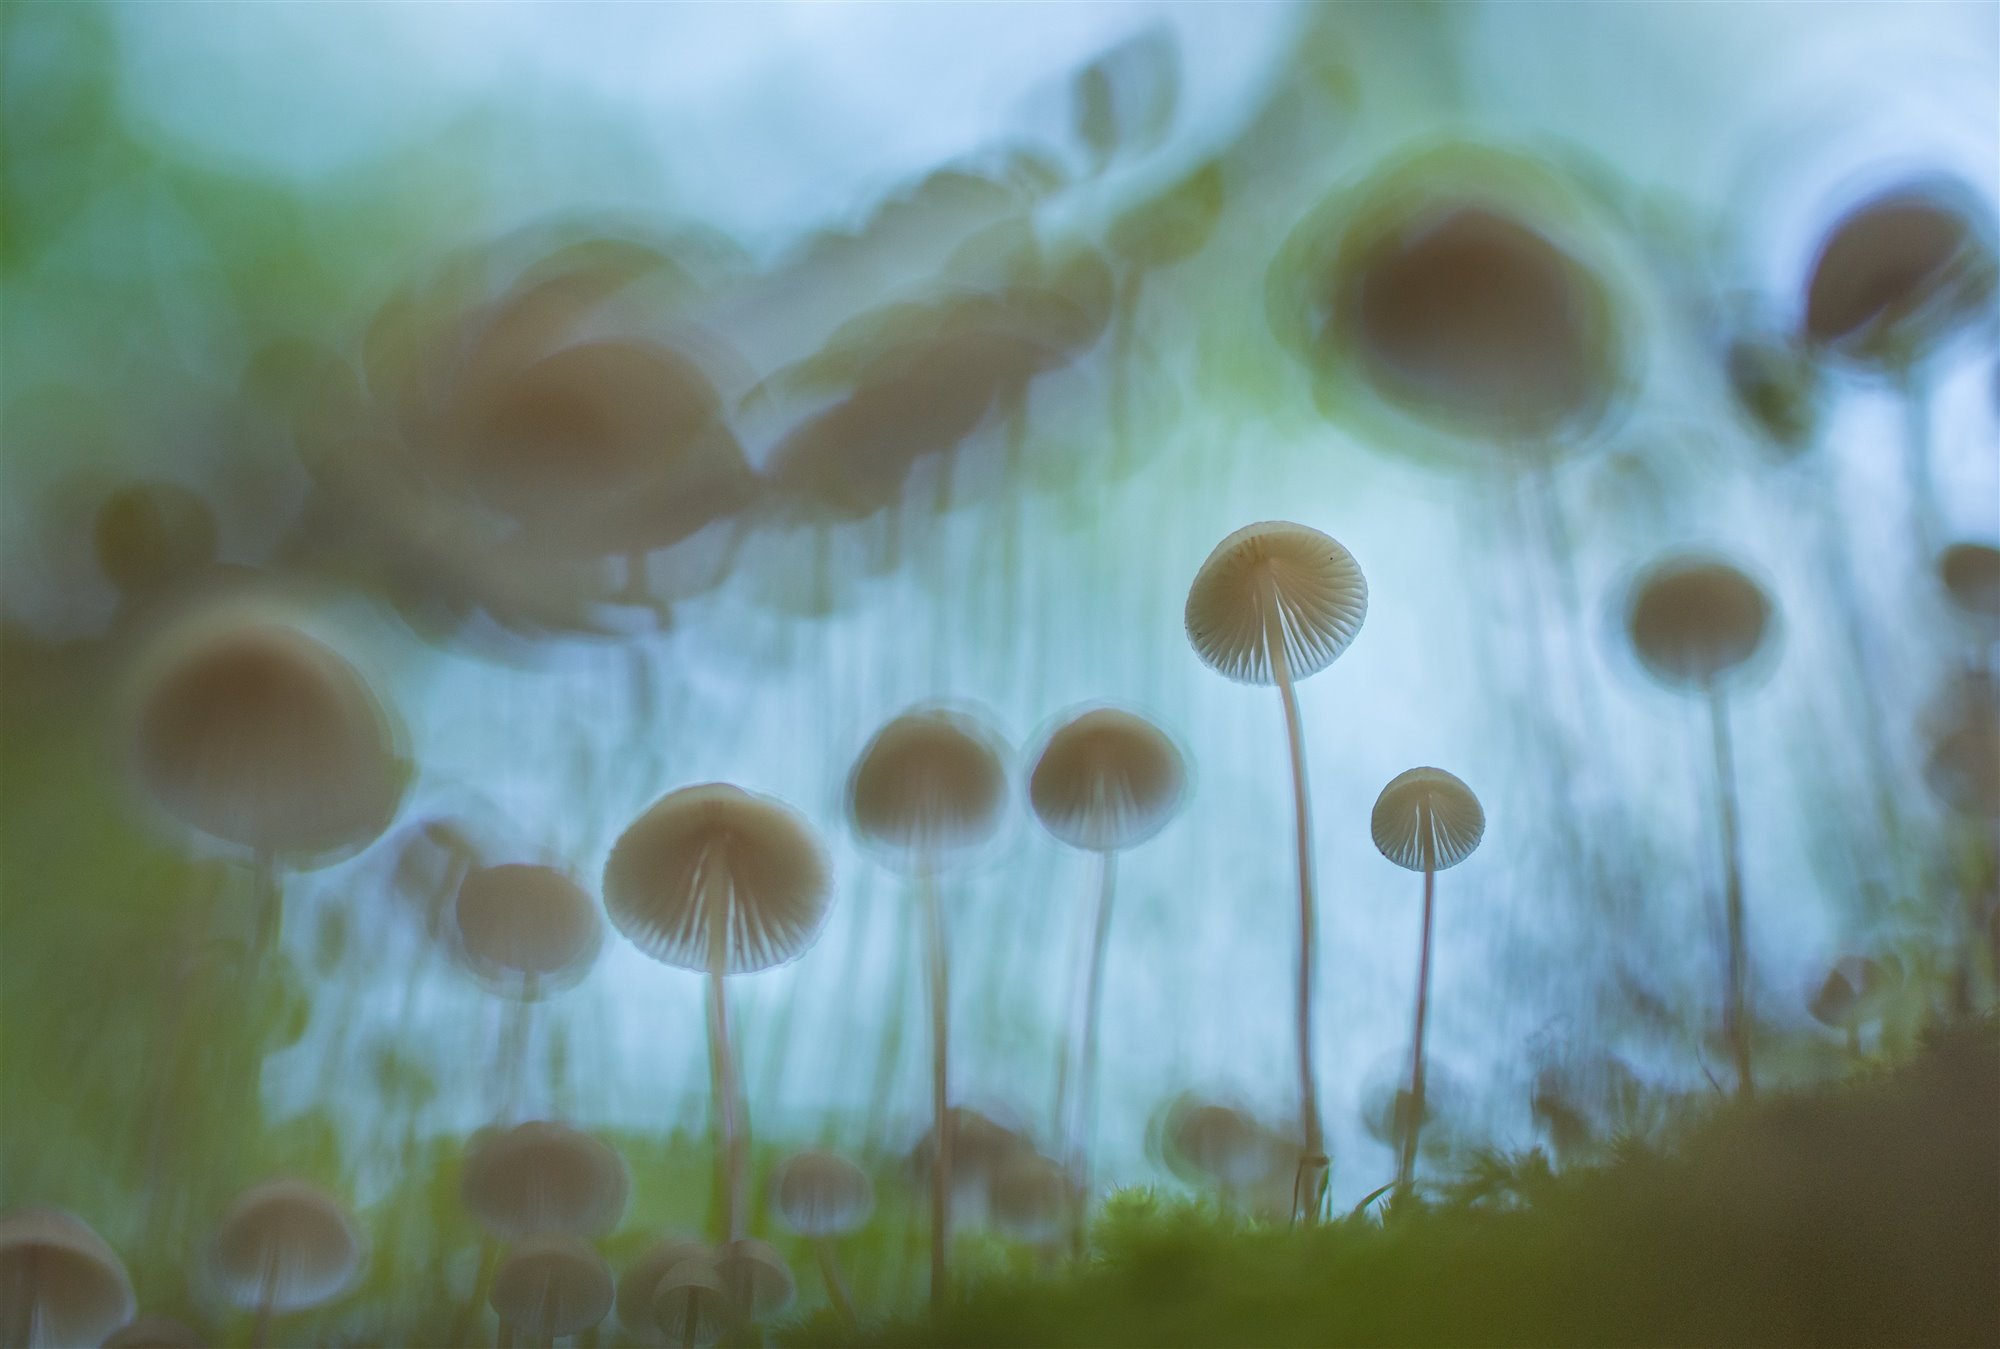 Mushroom army